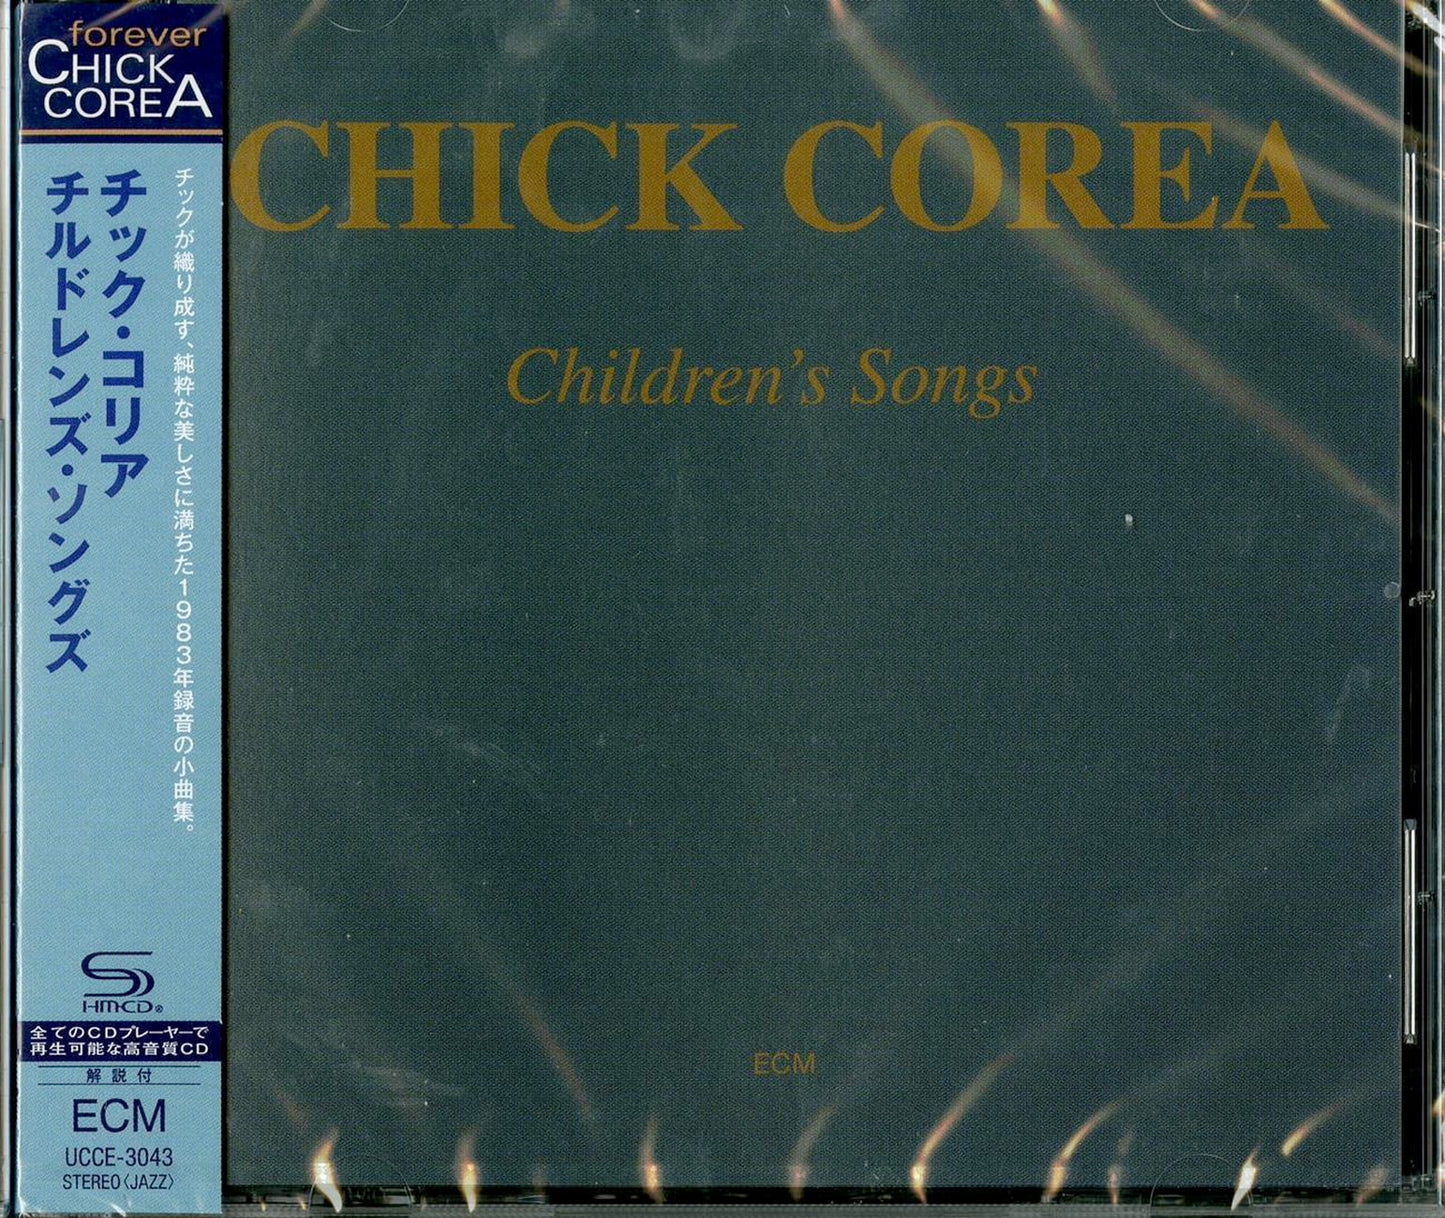 Chick Corea - Children'S Songs - Japan  SHM-CD